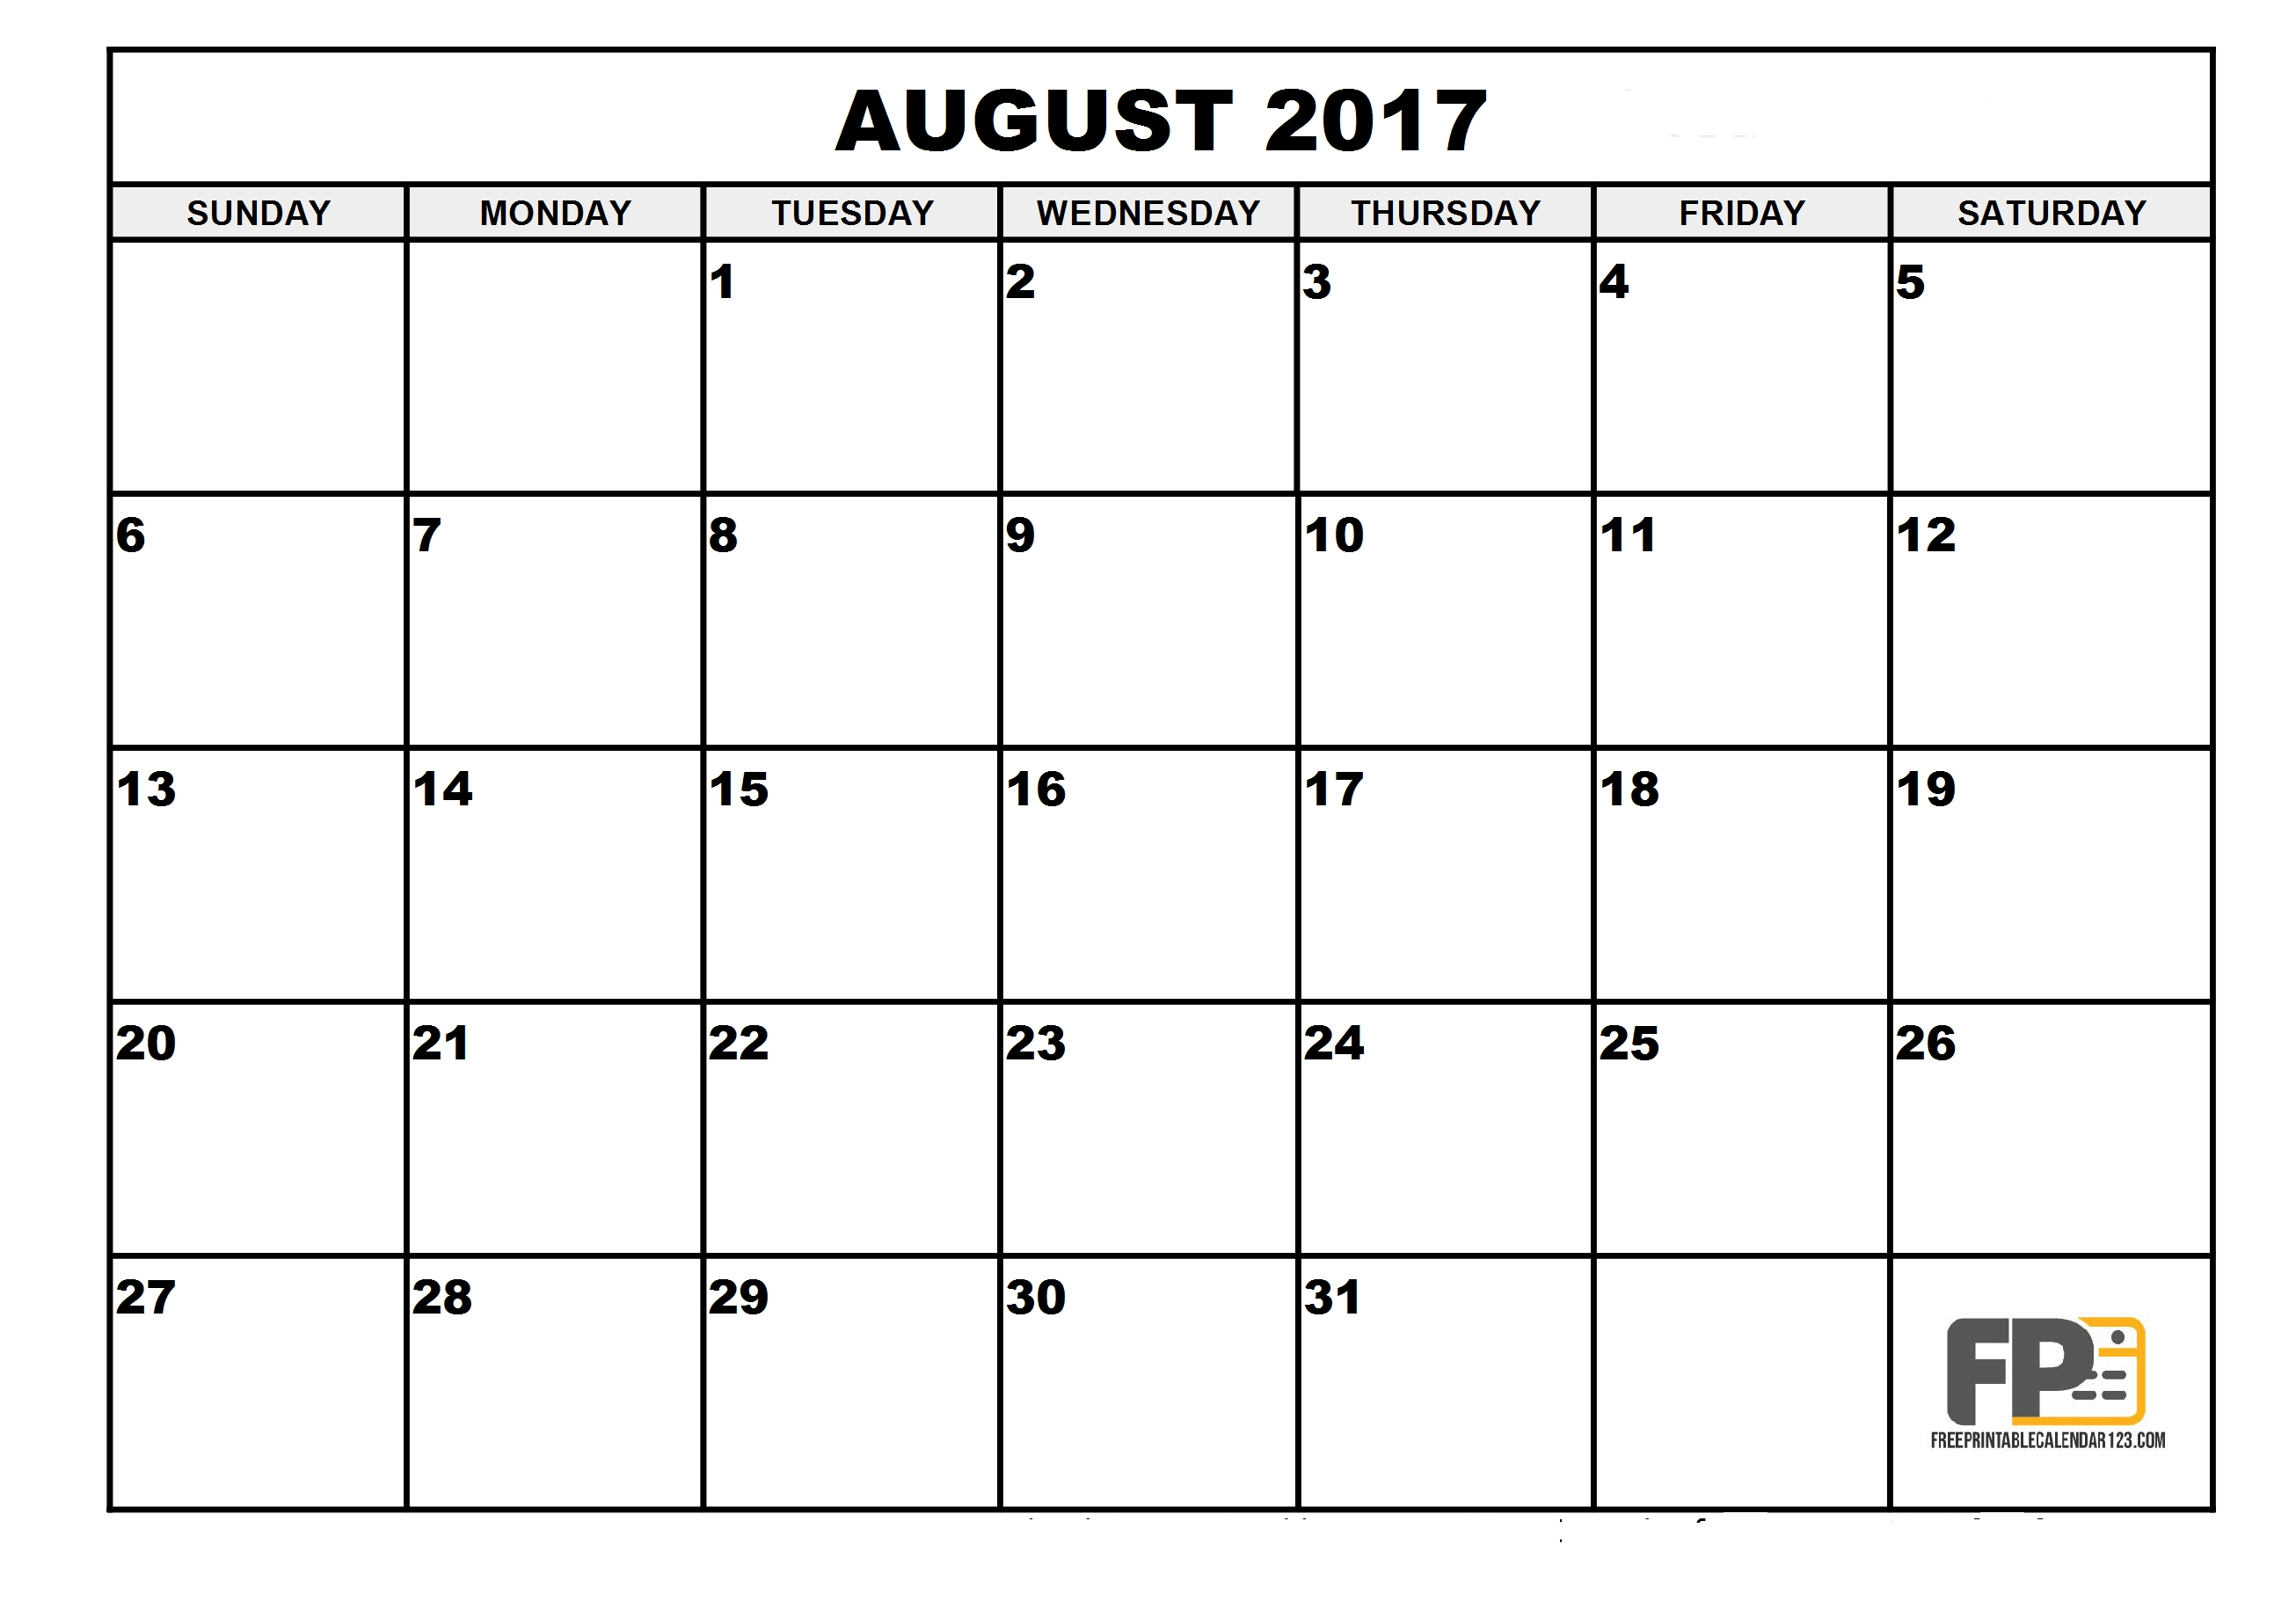 Printable August 2017 Calendar Pdf | Aaron The Artist - Free Printable August 2017